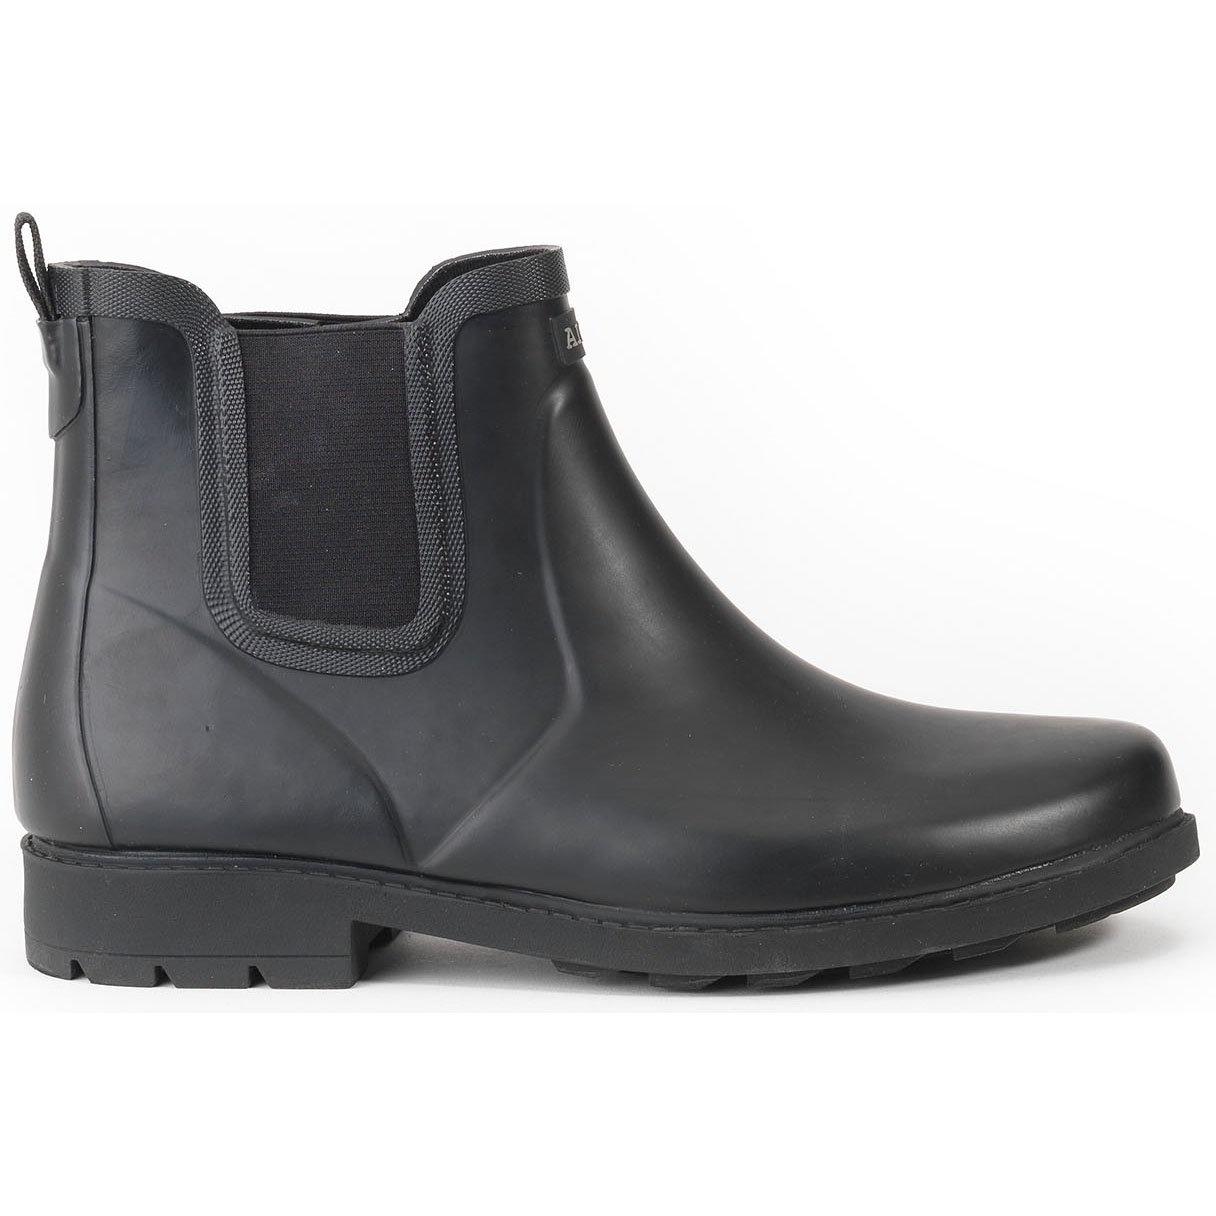 Aigle Mens Carville Wellies Ankle Rain Boots - UK 8 Black 2951